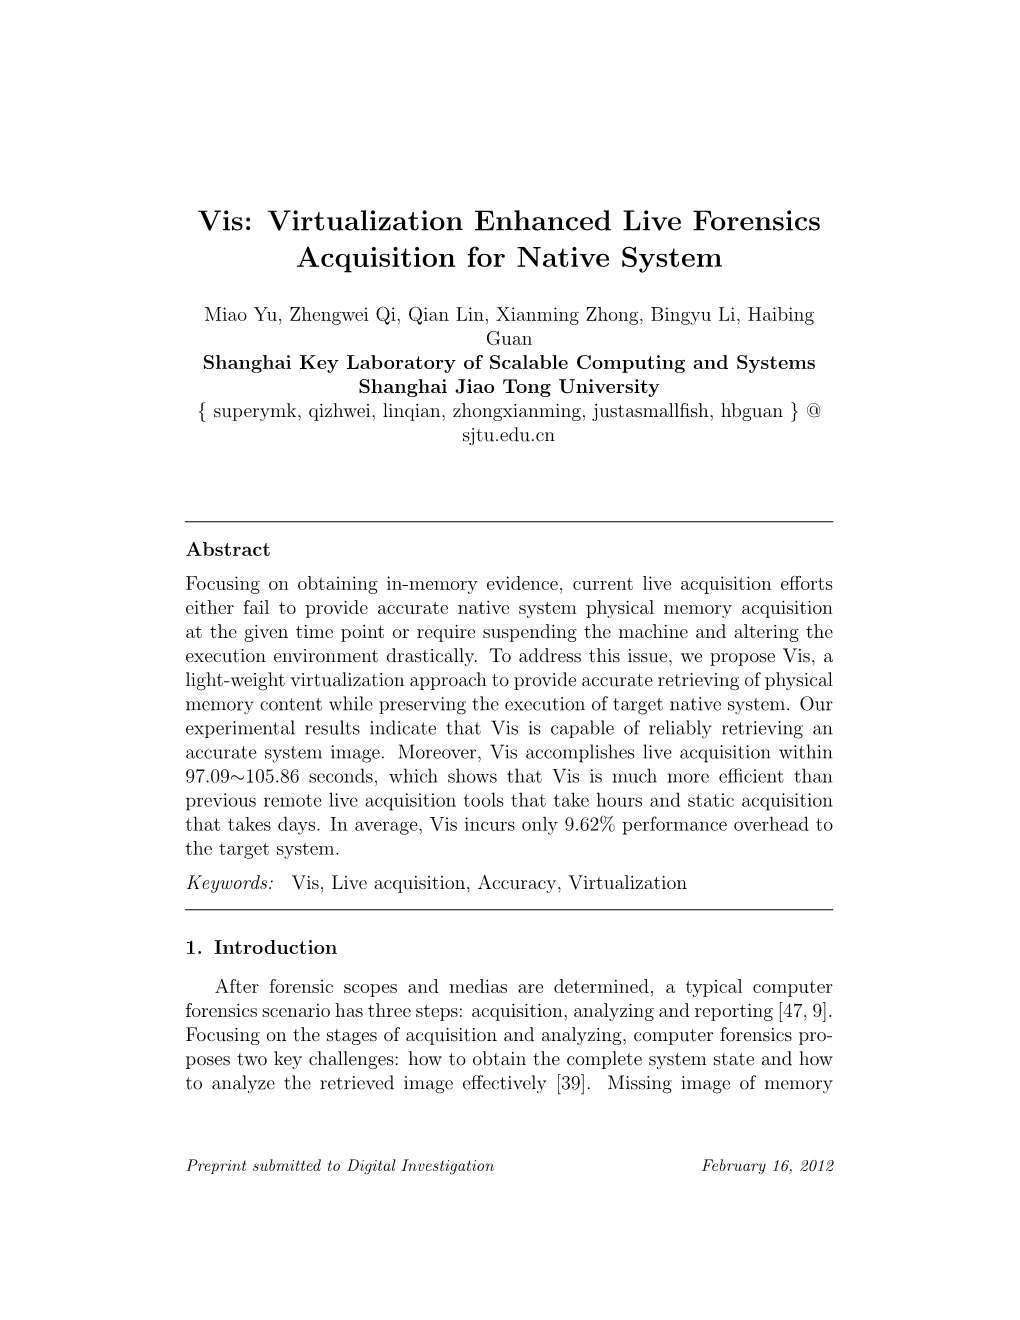 Vis: Virtualization Enhanced Live Forensics Acquisition for Native System